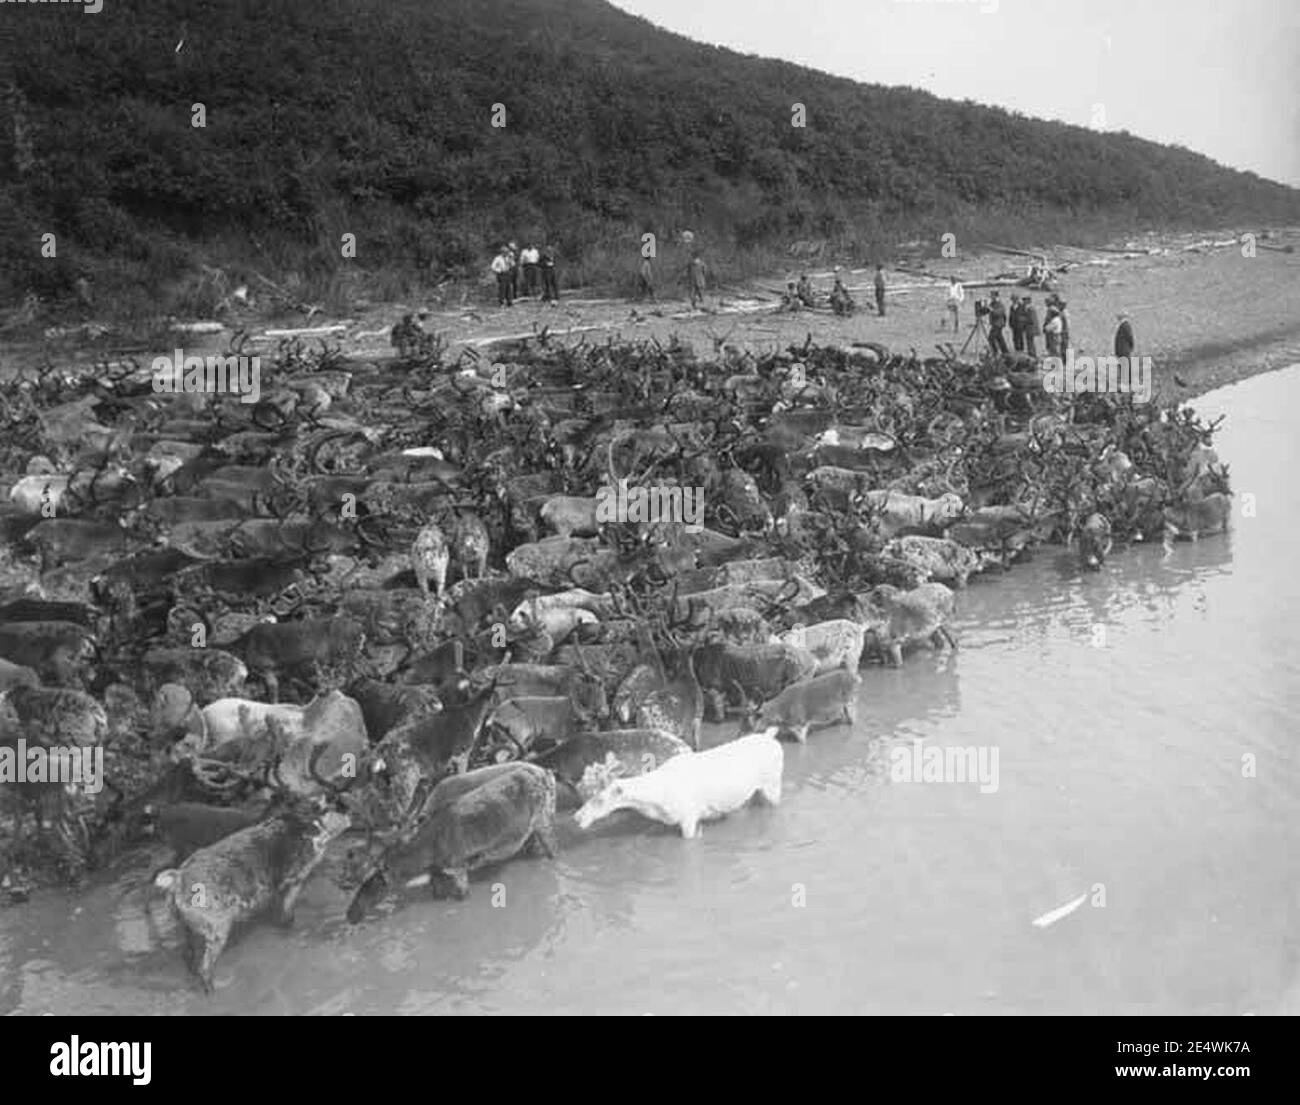 Men photographing reindeer along shoreline, Mountain Village, ca 1914 Stock Photo